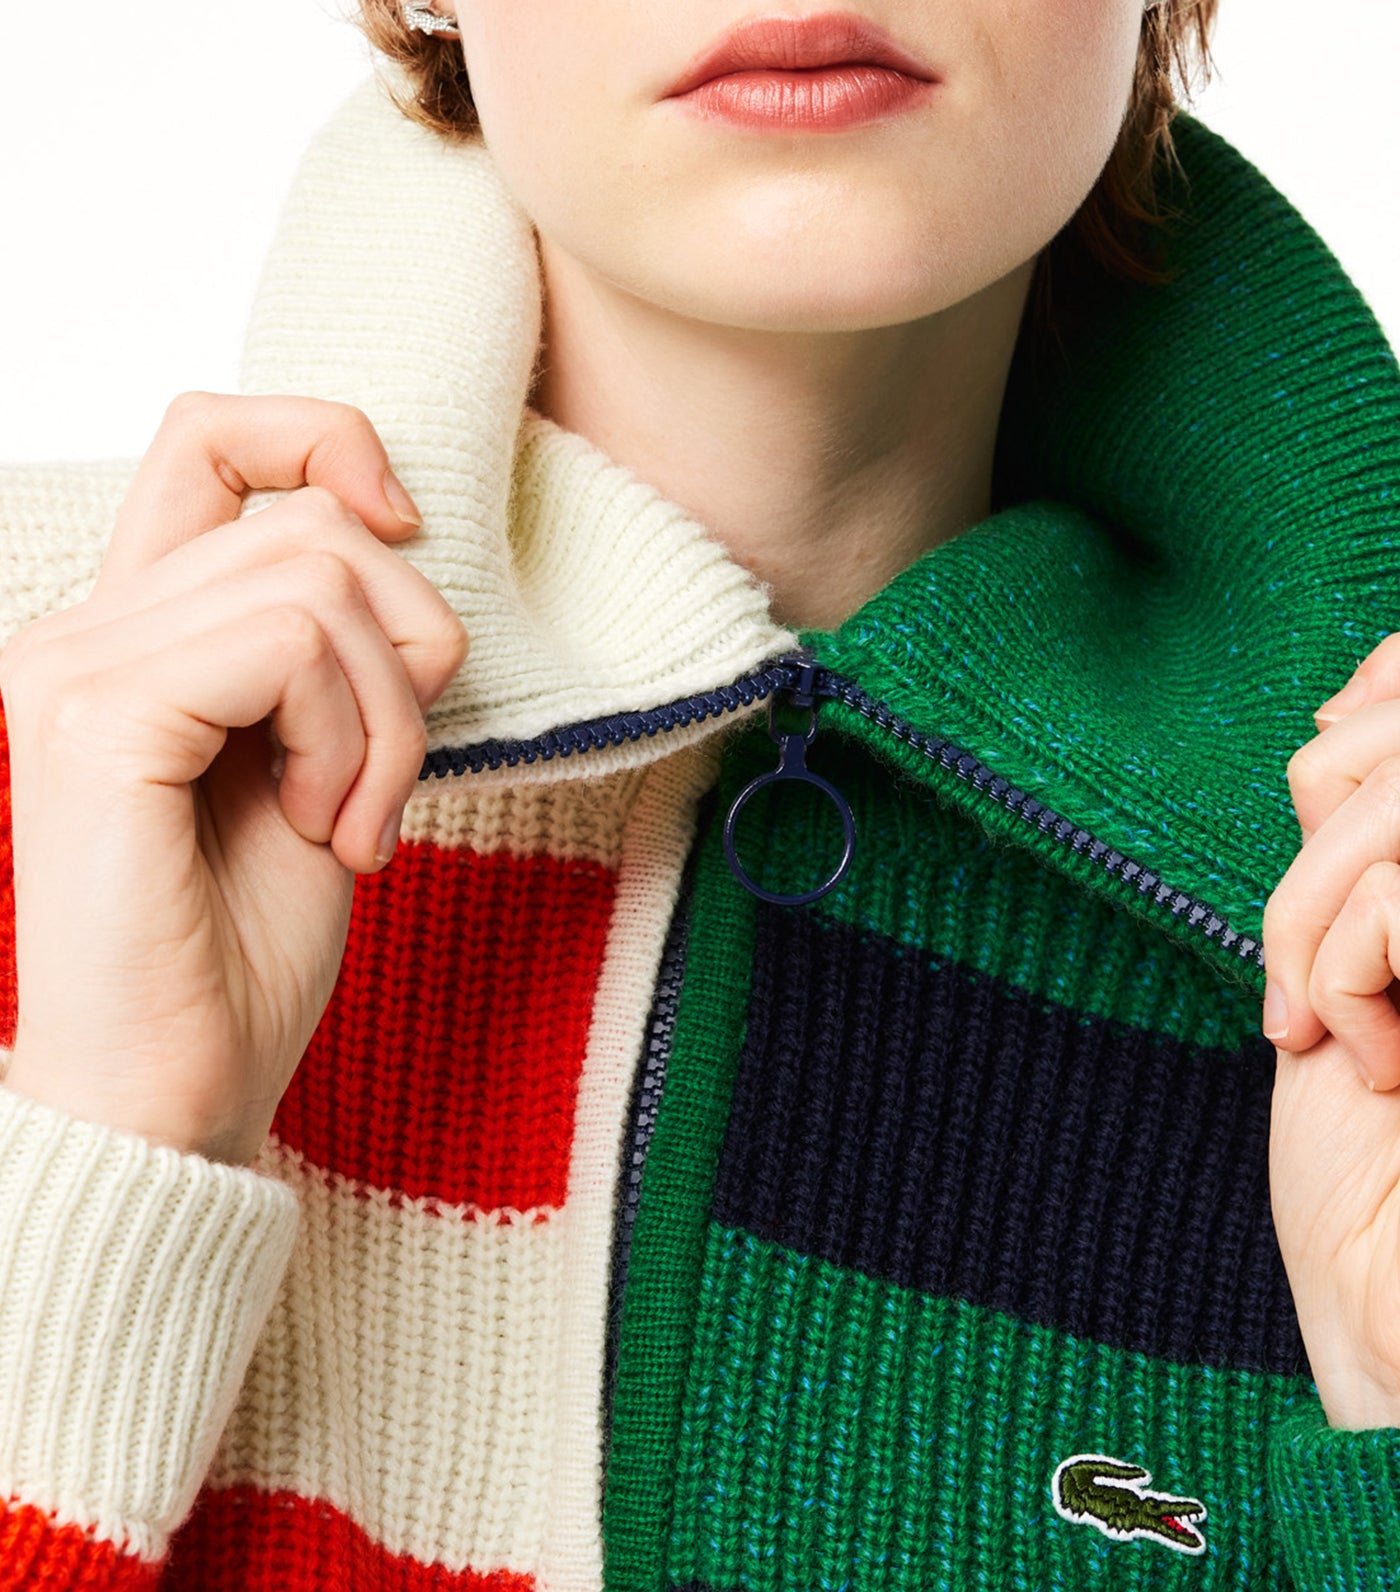 Wool Zip Neck Contrast Stripe Colorblock Sweater Lapland/Sunrise-Navy Blue